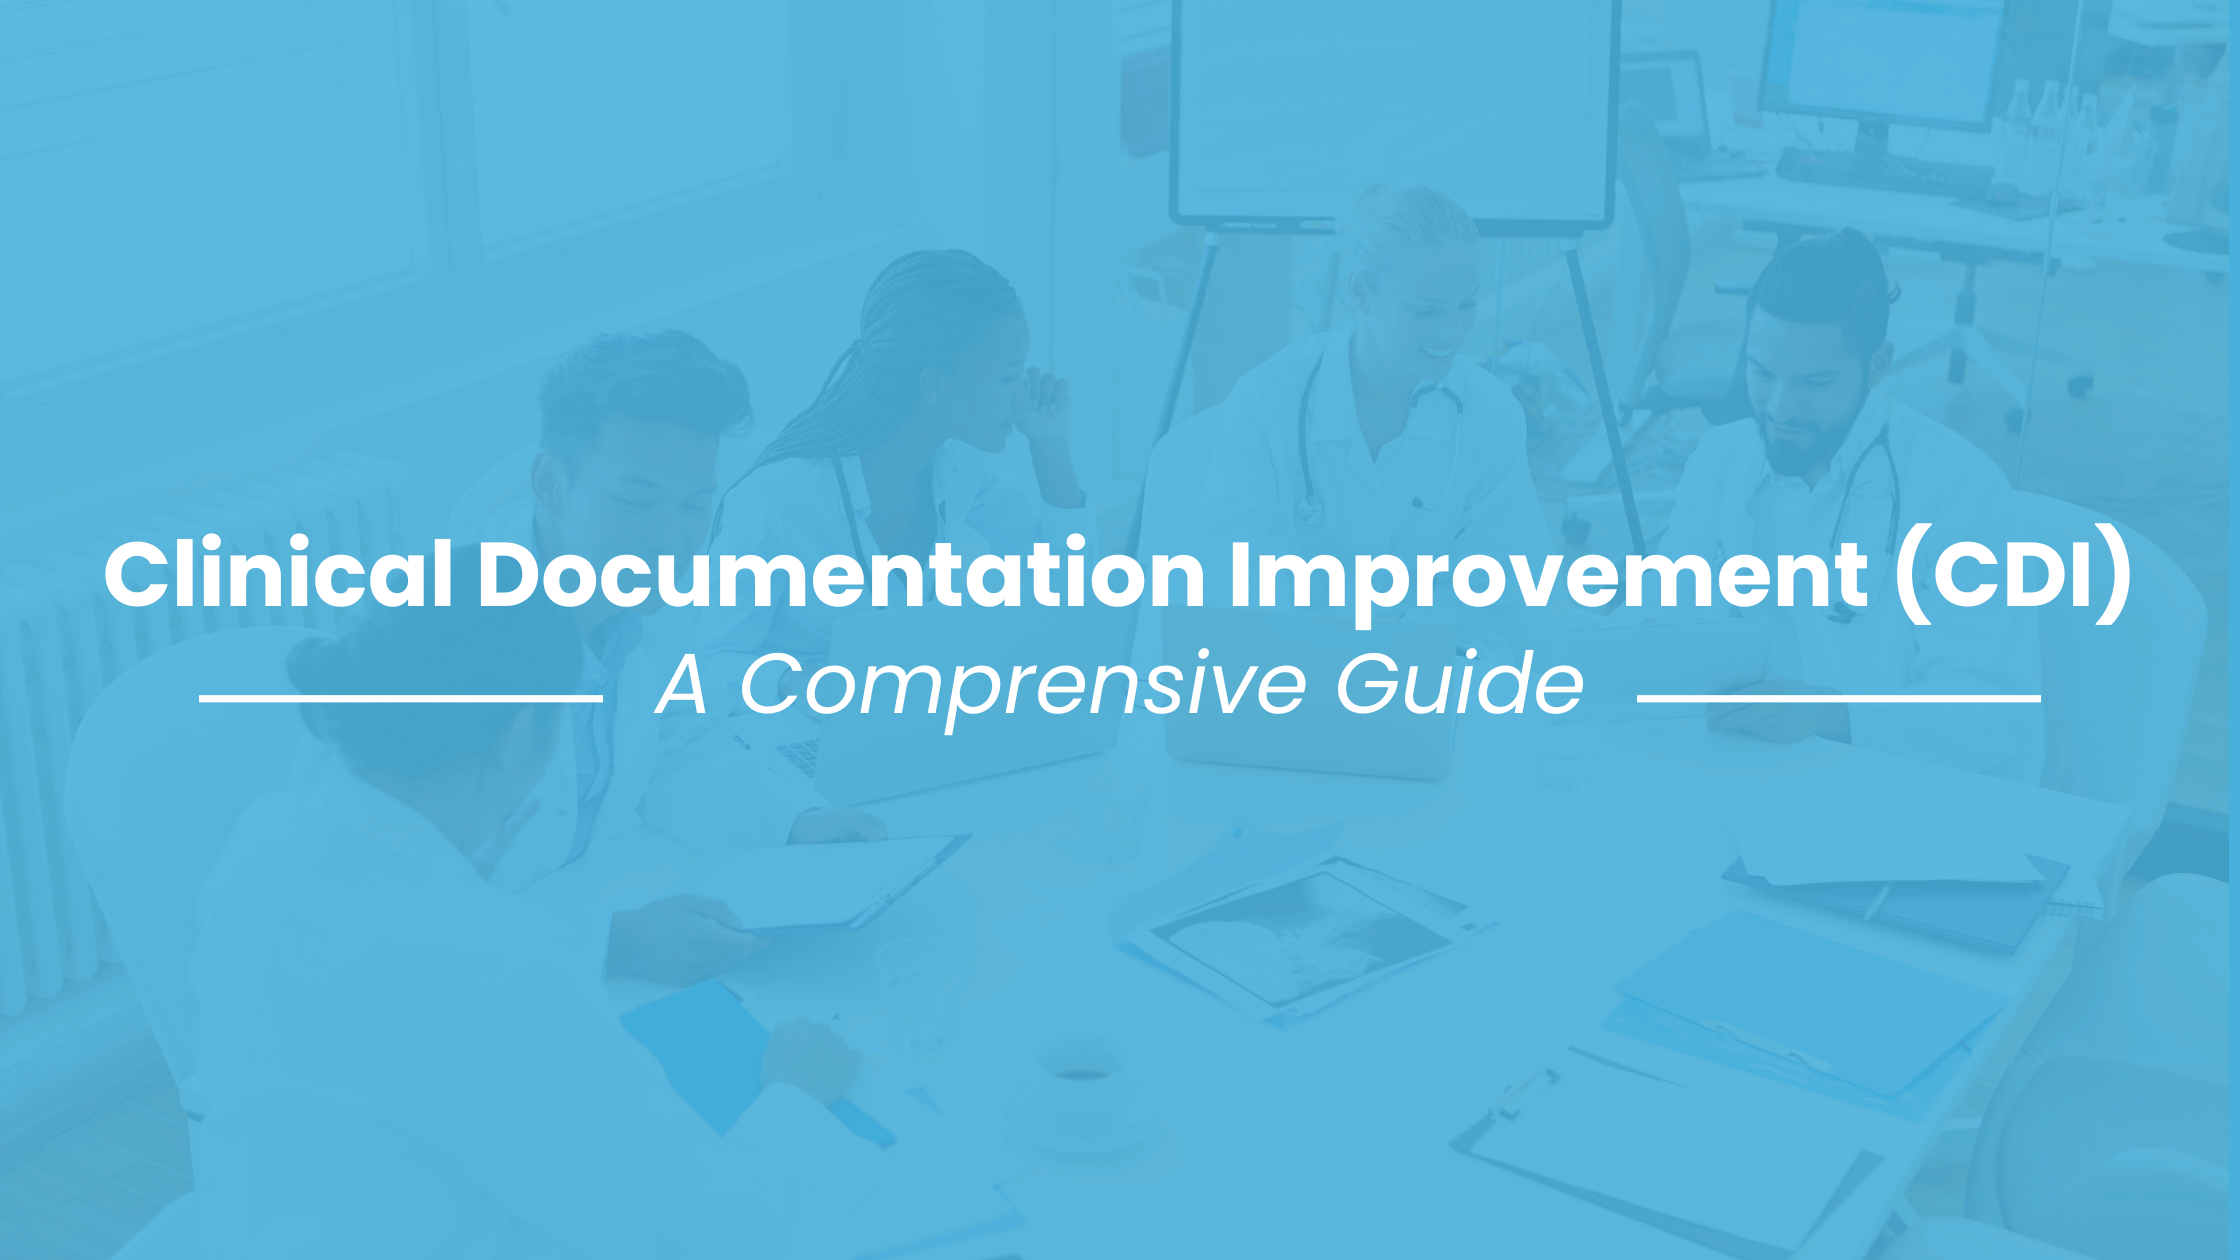 Clinical Documentation Improvement (CDI